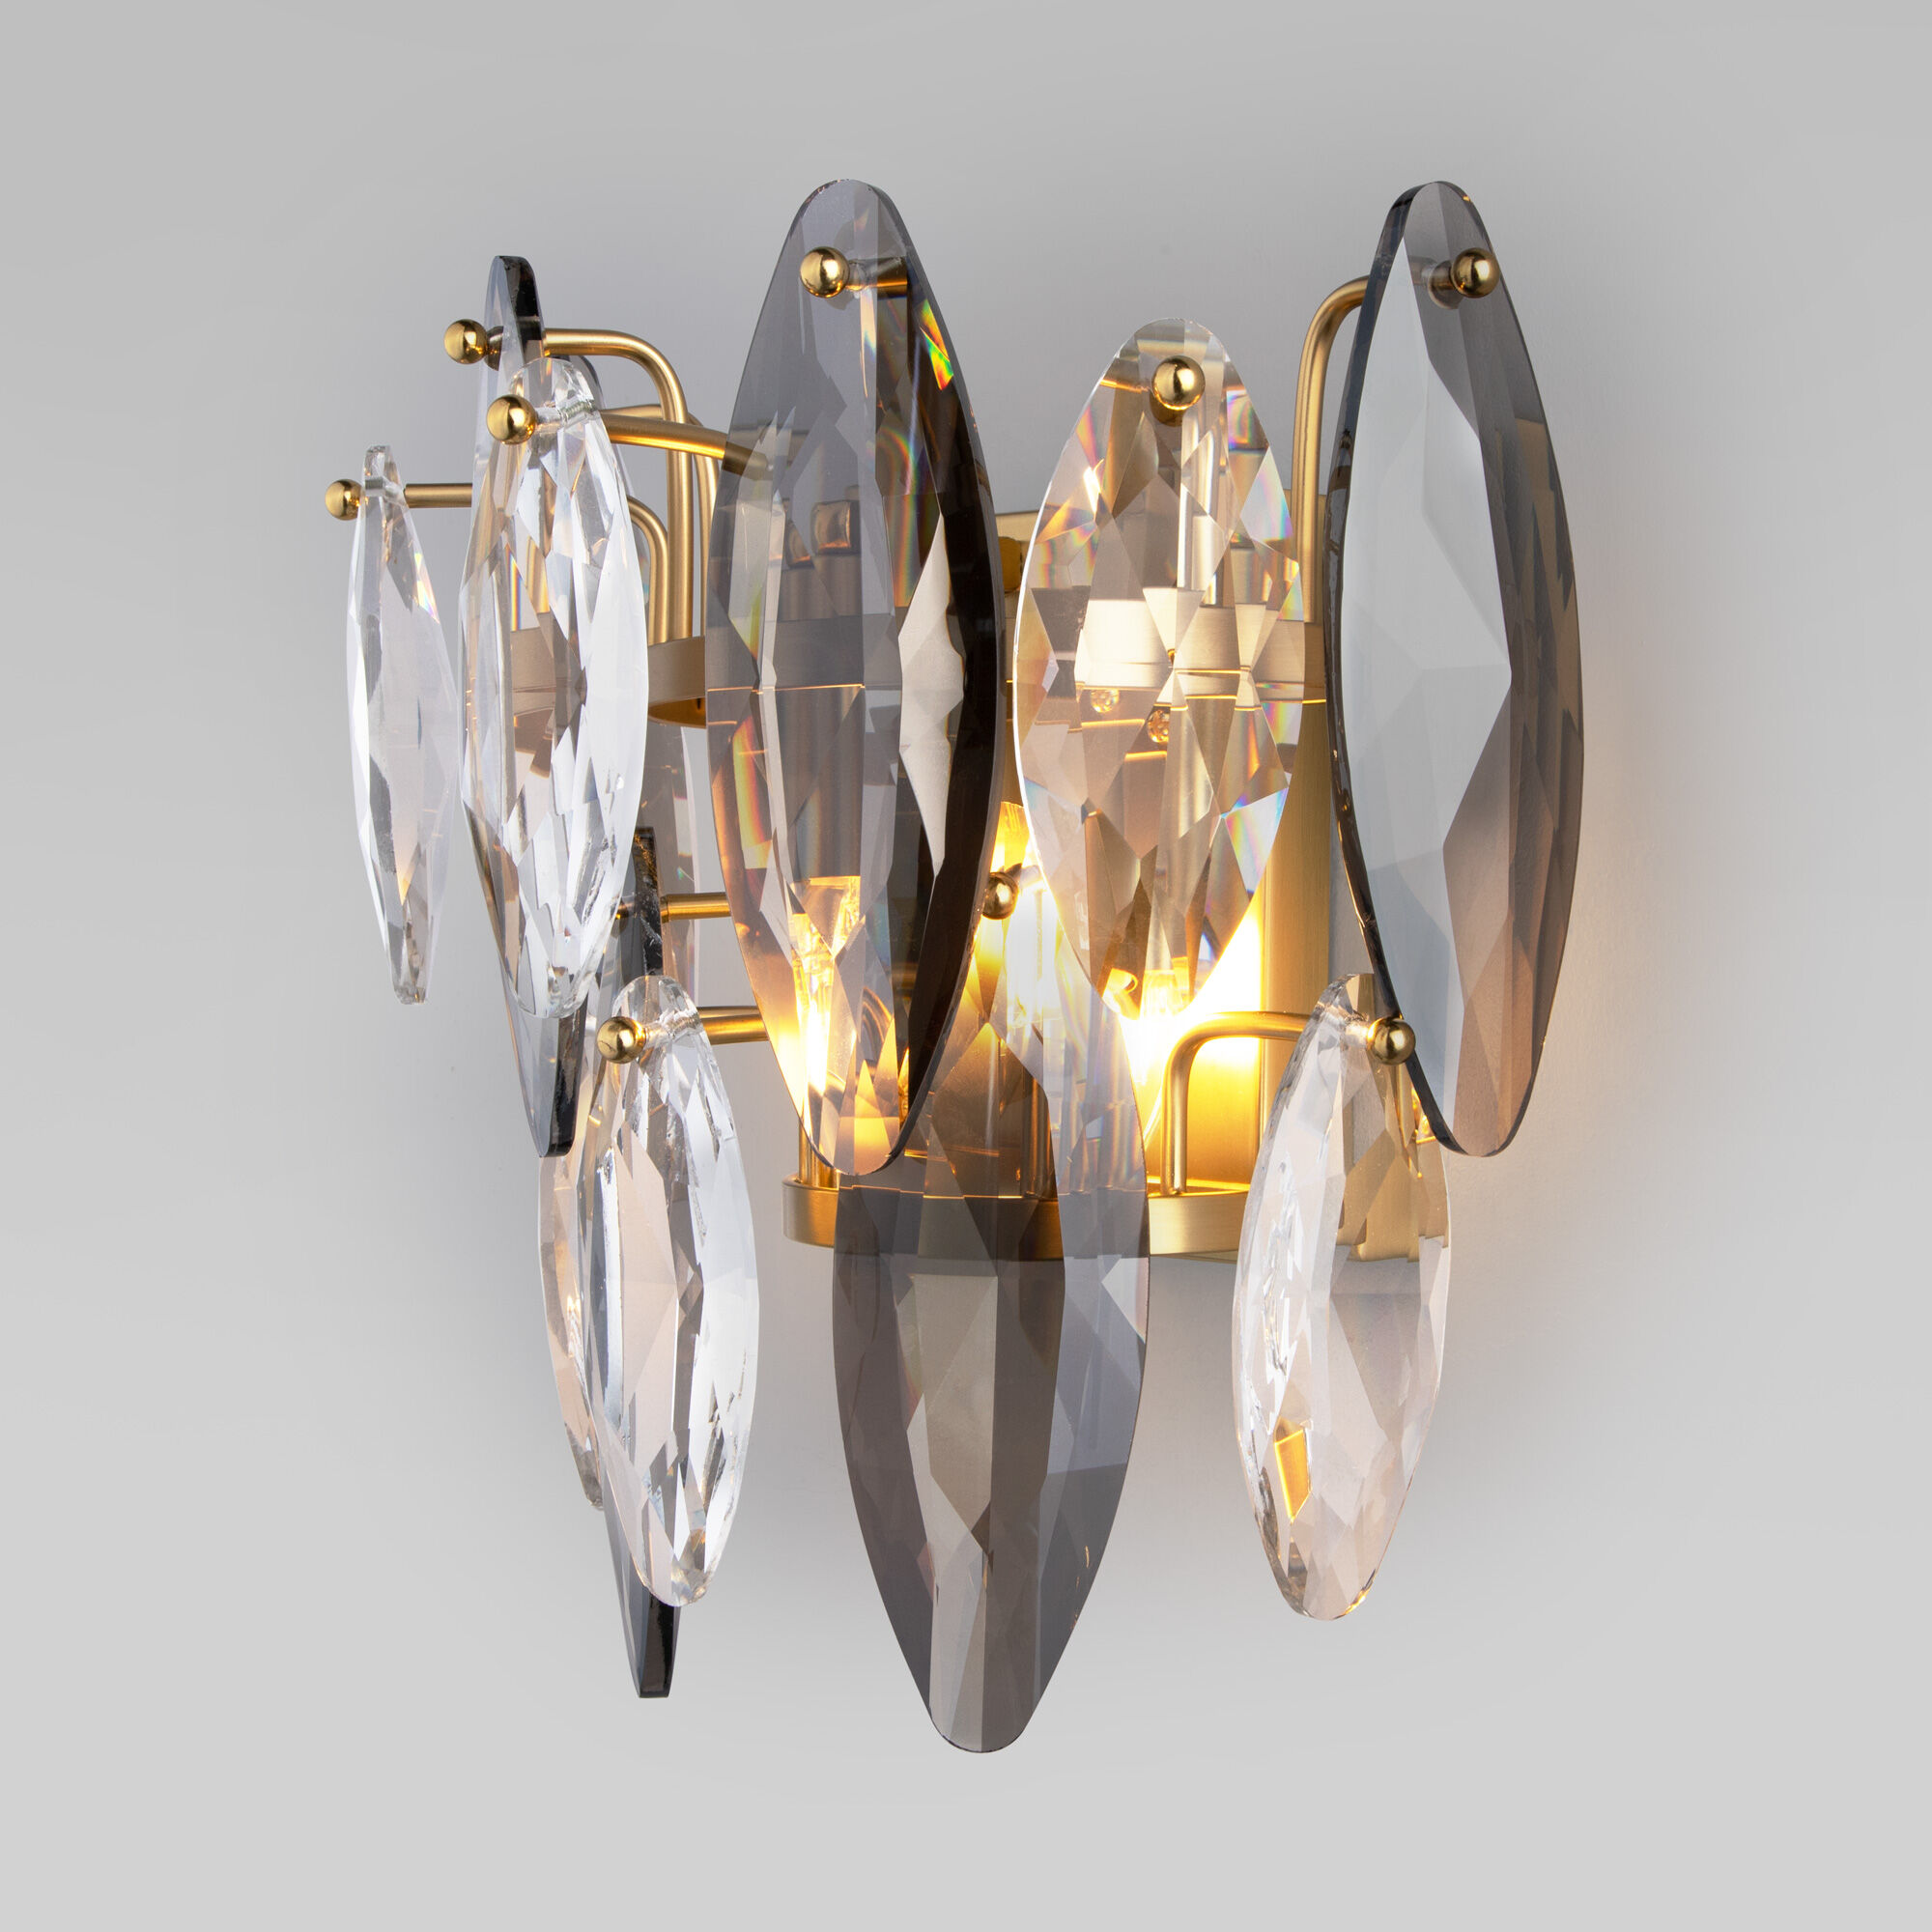 Настенный светильник с хрусталем Bogate's Onyx 372/2 Strotskis. Фото 1